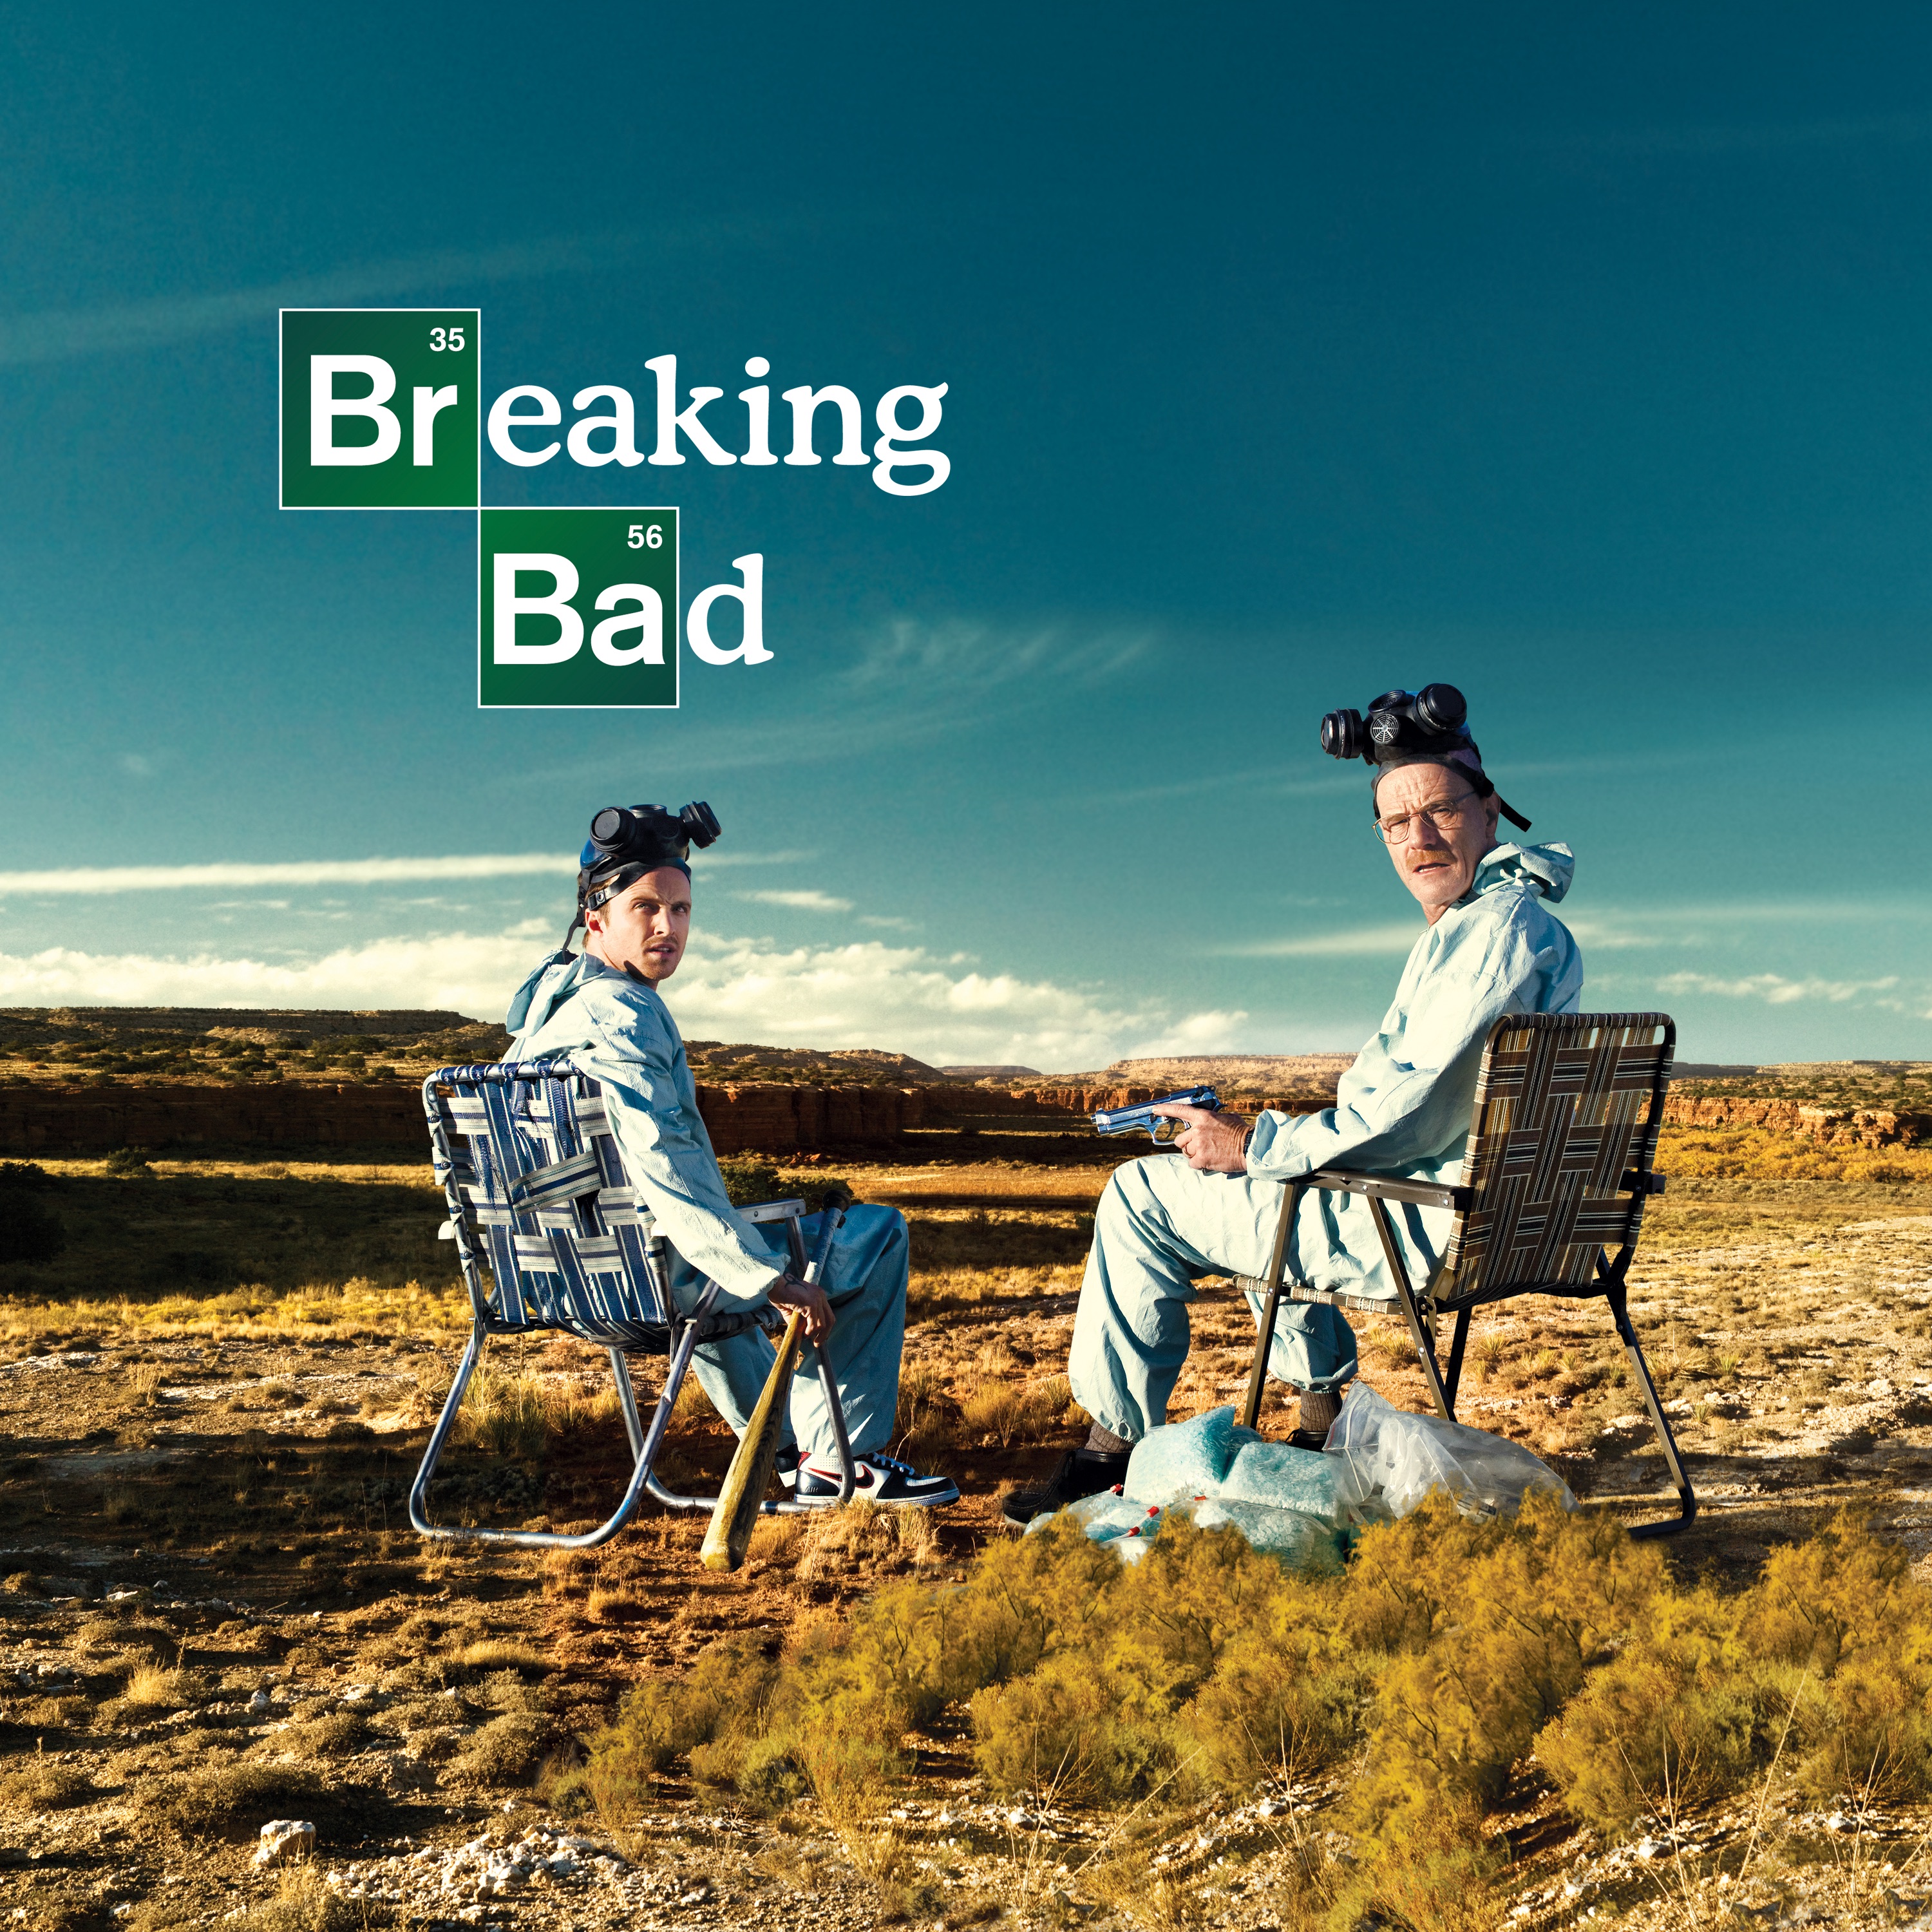 Breaking Bad season 1 - Wikipedia